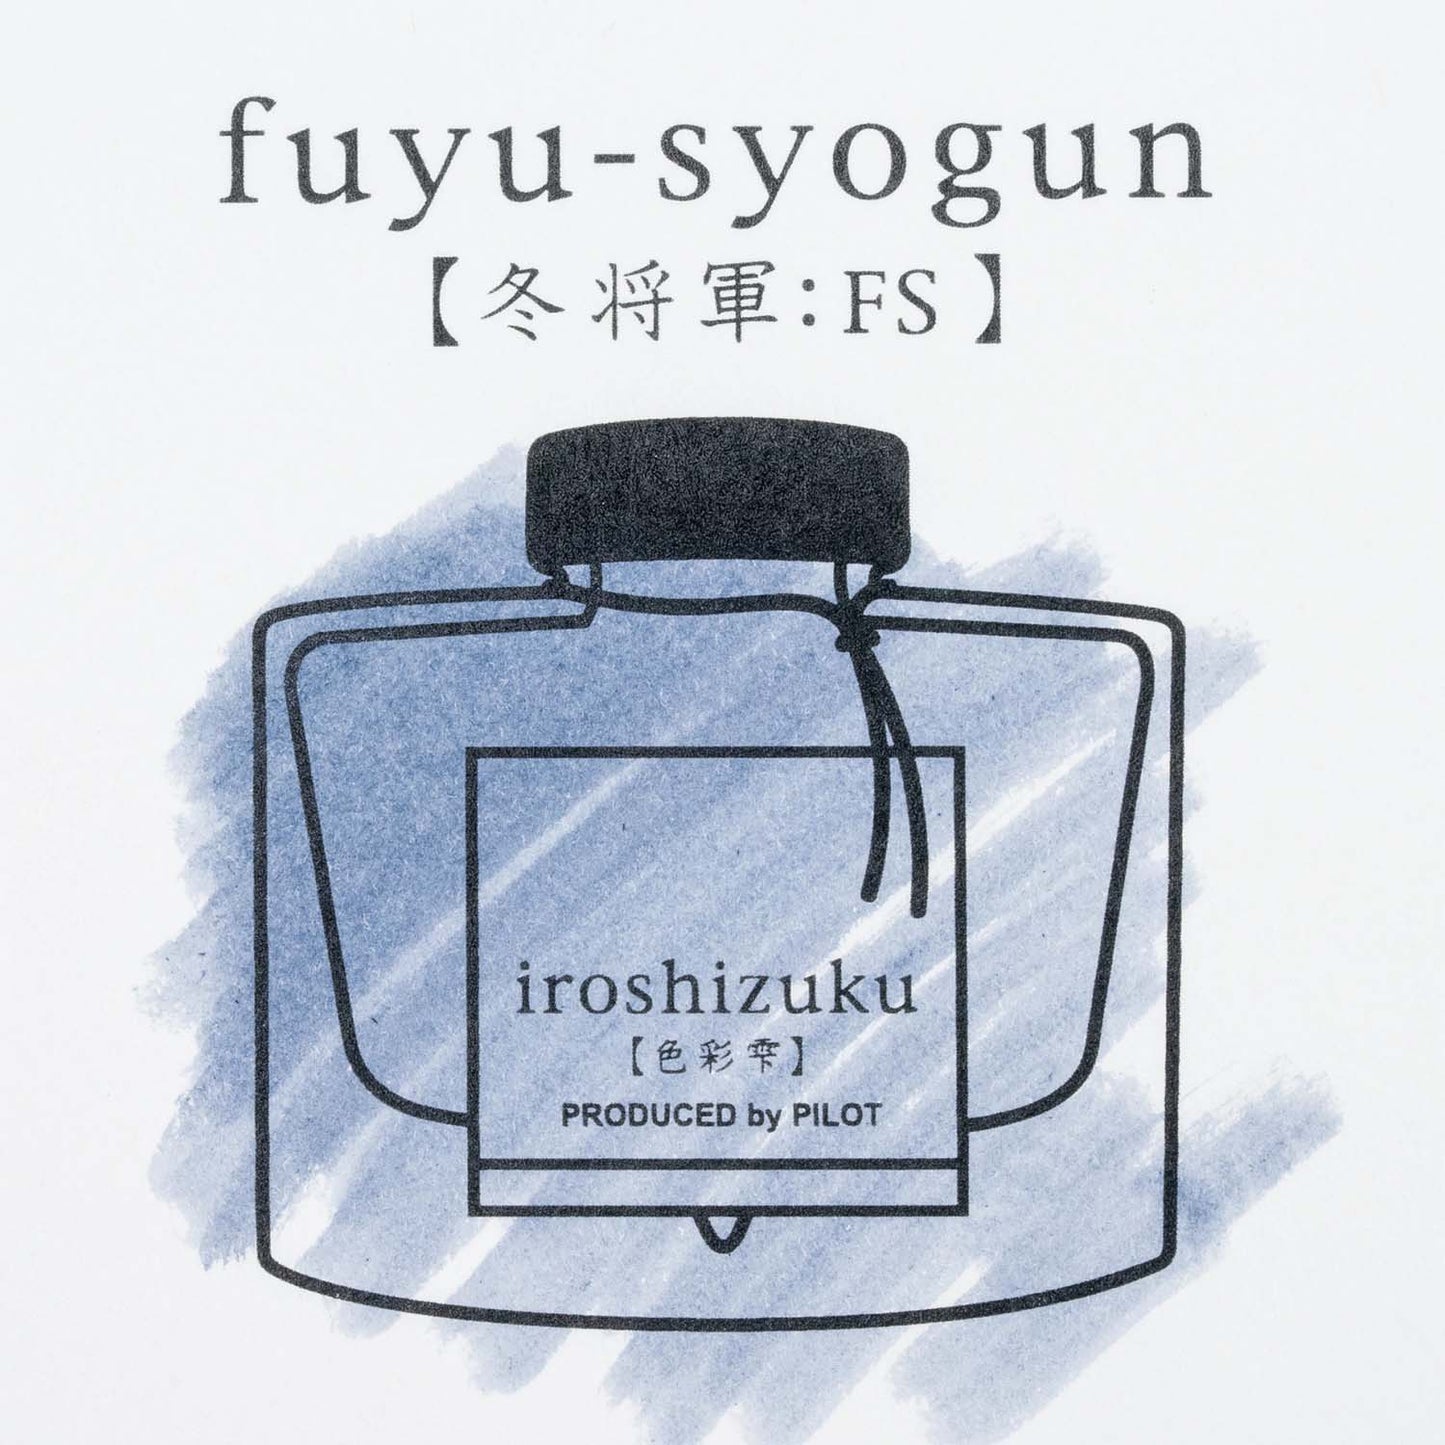 Pilot Iroshizuku Fuyu-syogun fountain pen ink sample